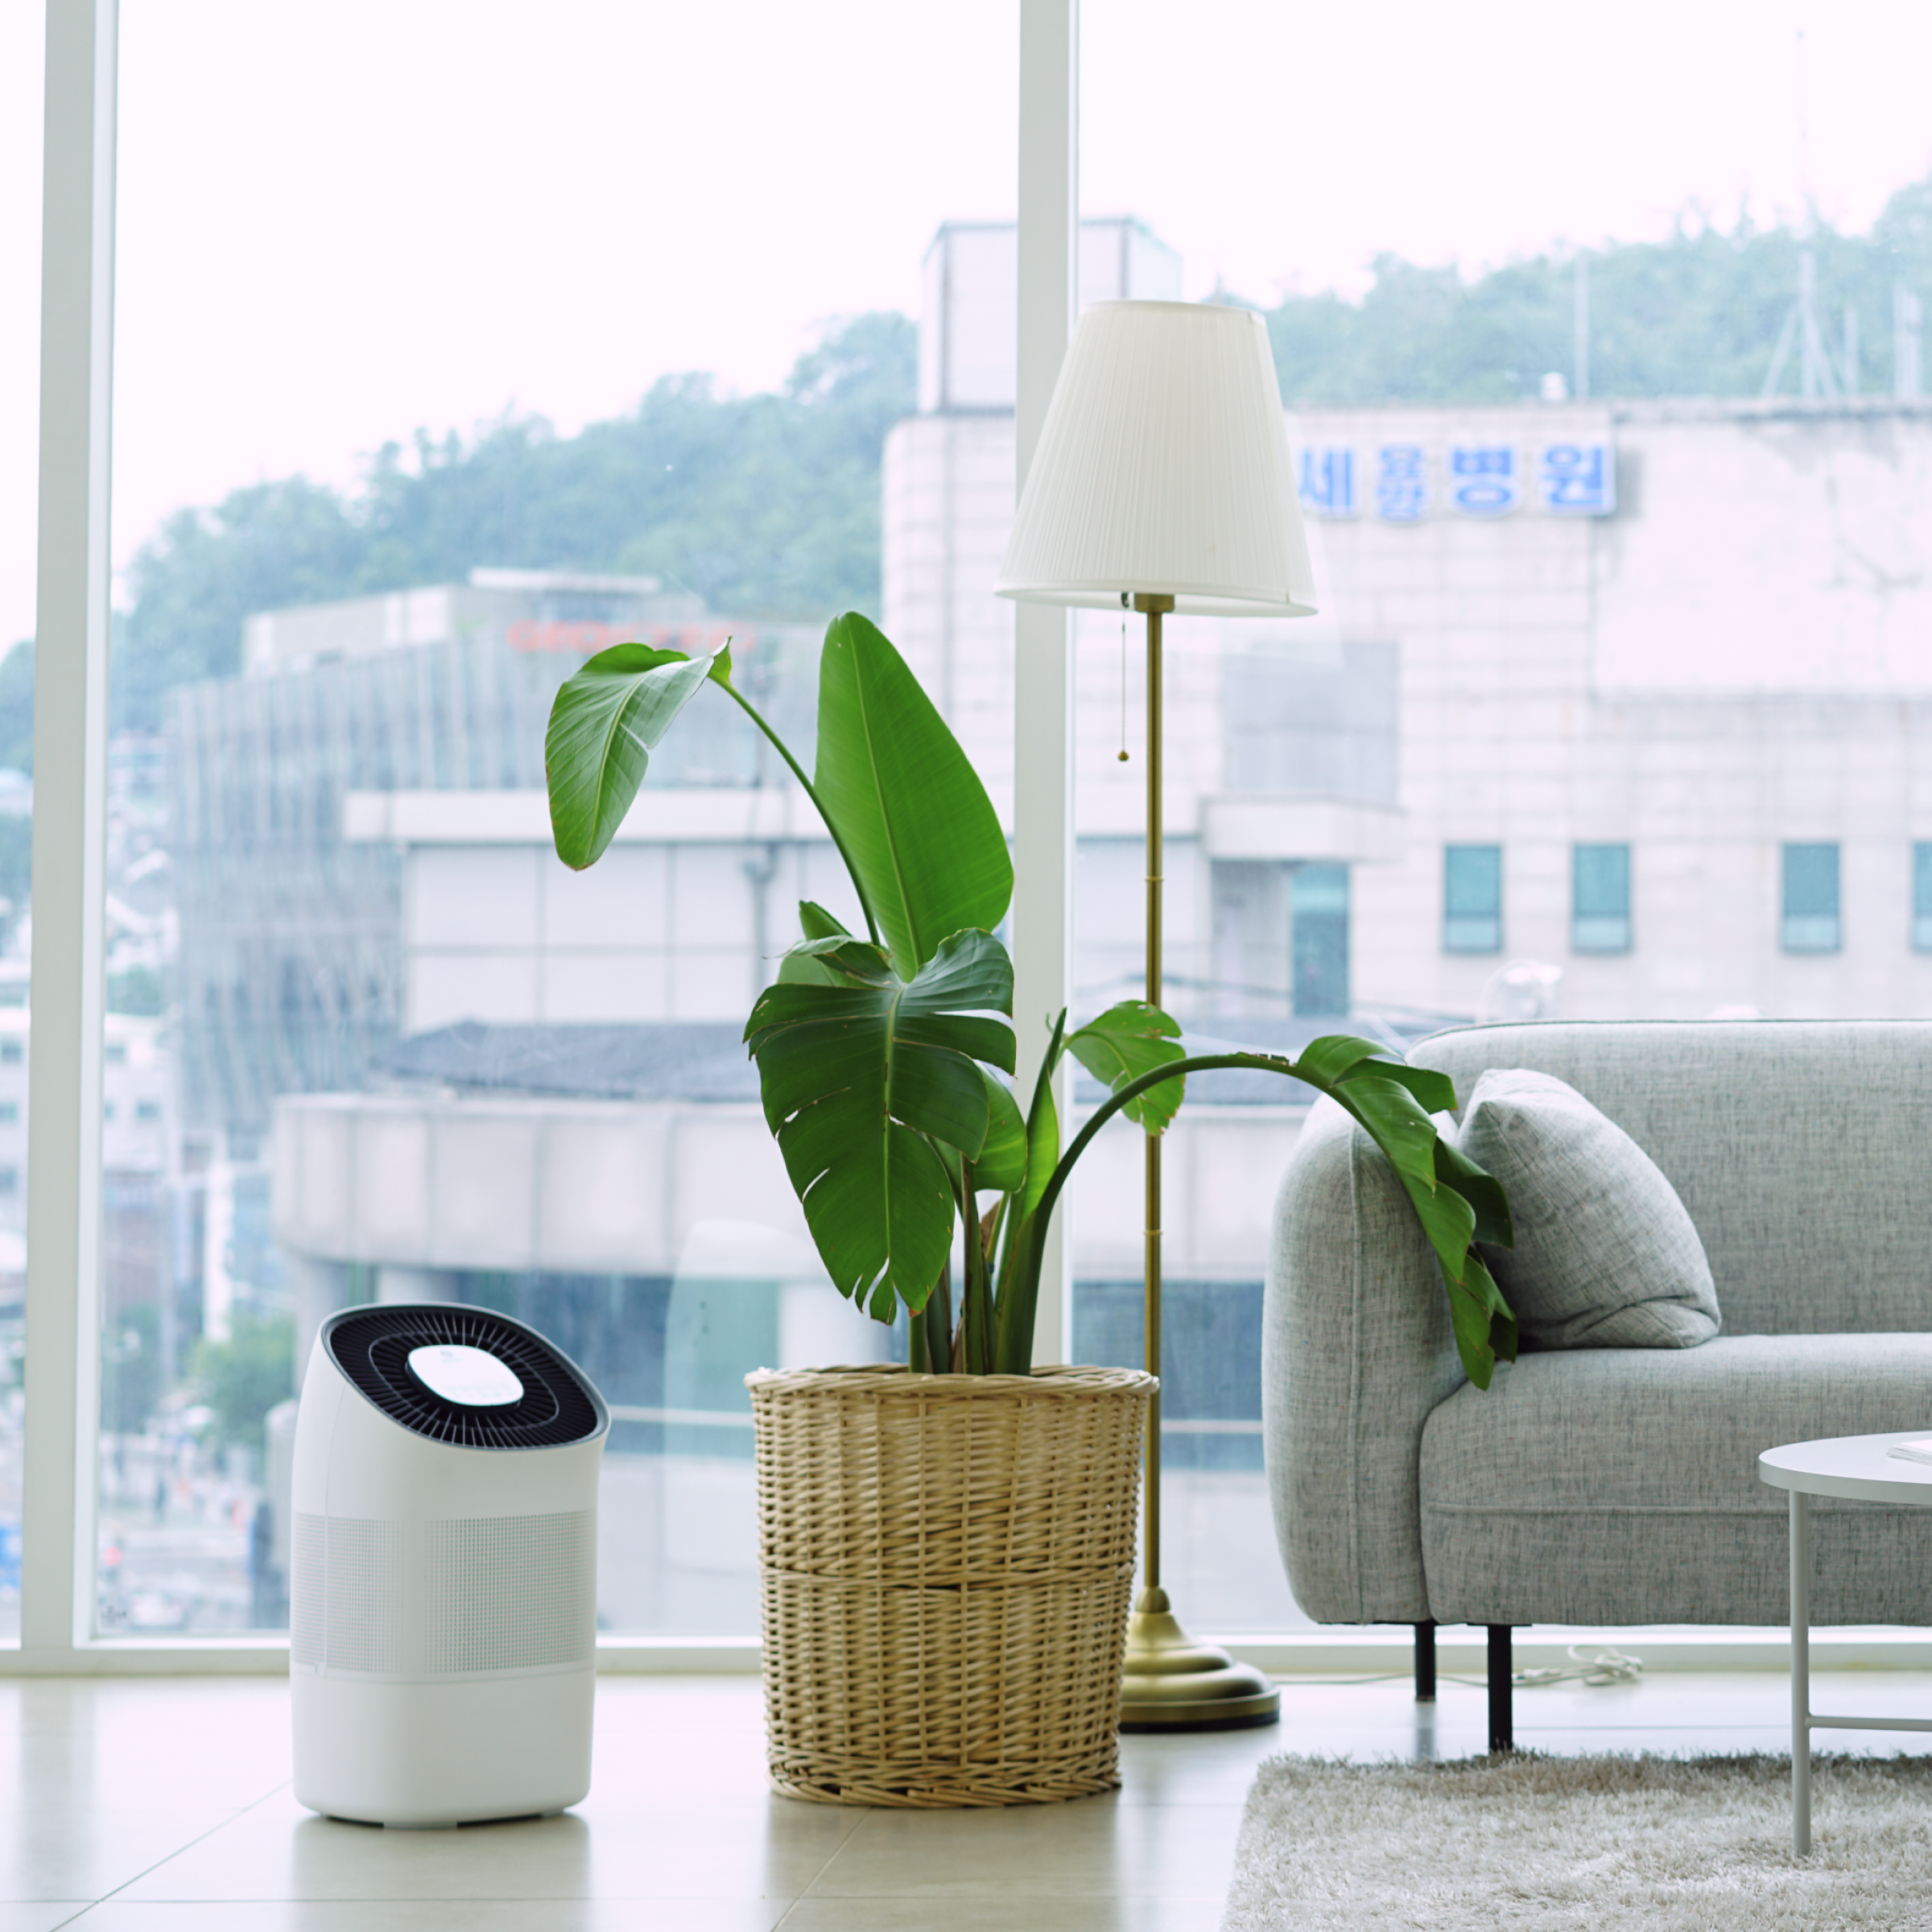 Zenwell Super Humidifier Smart in urban apartment living room